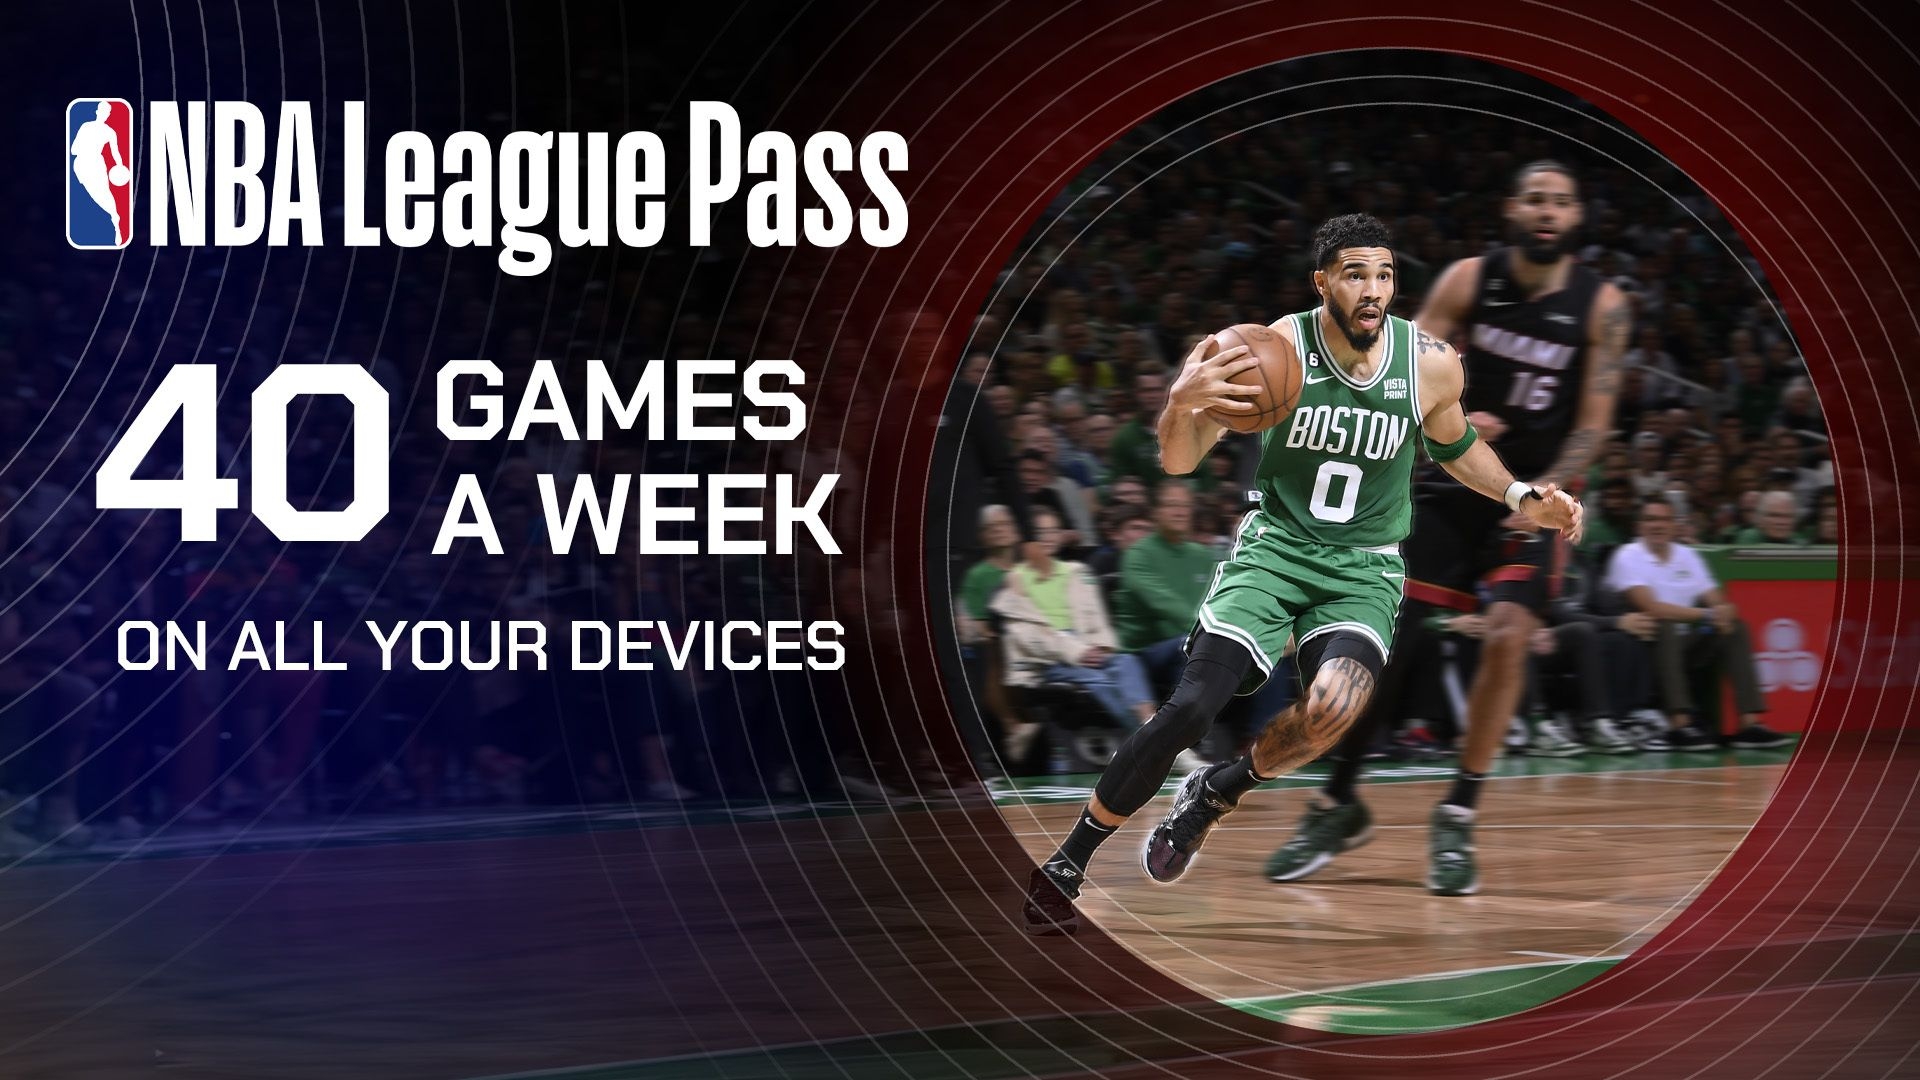 Watch NBA basketball games all season long with NBA League Pass and Spectrum TV.